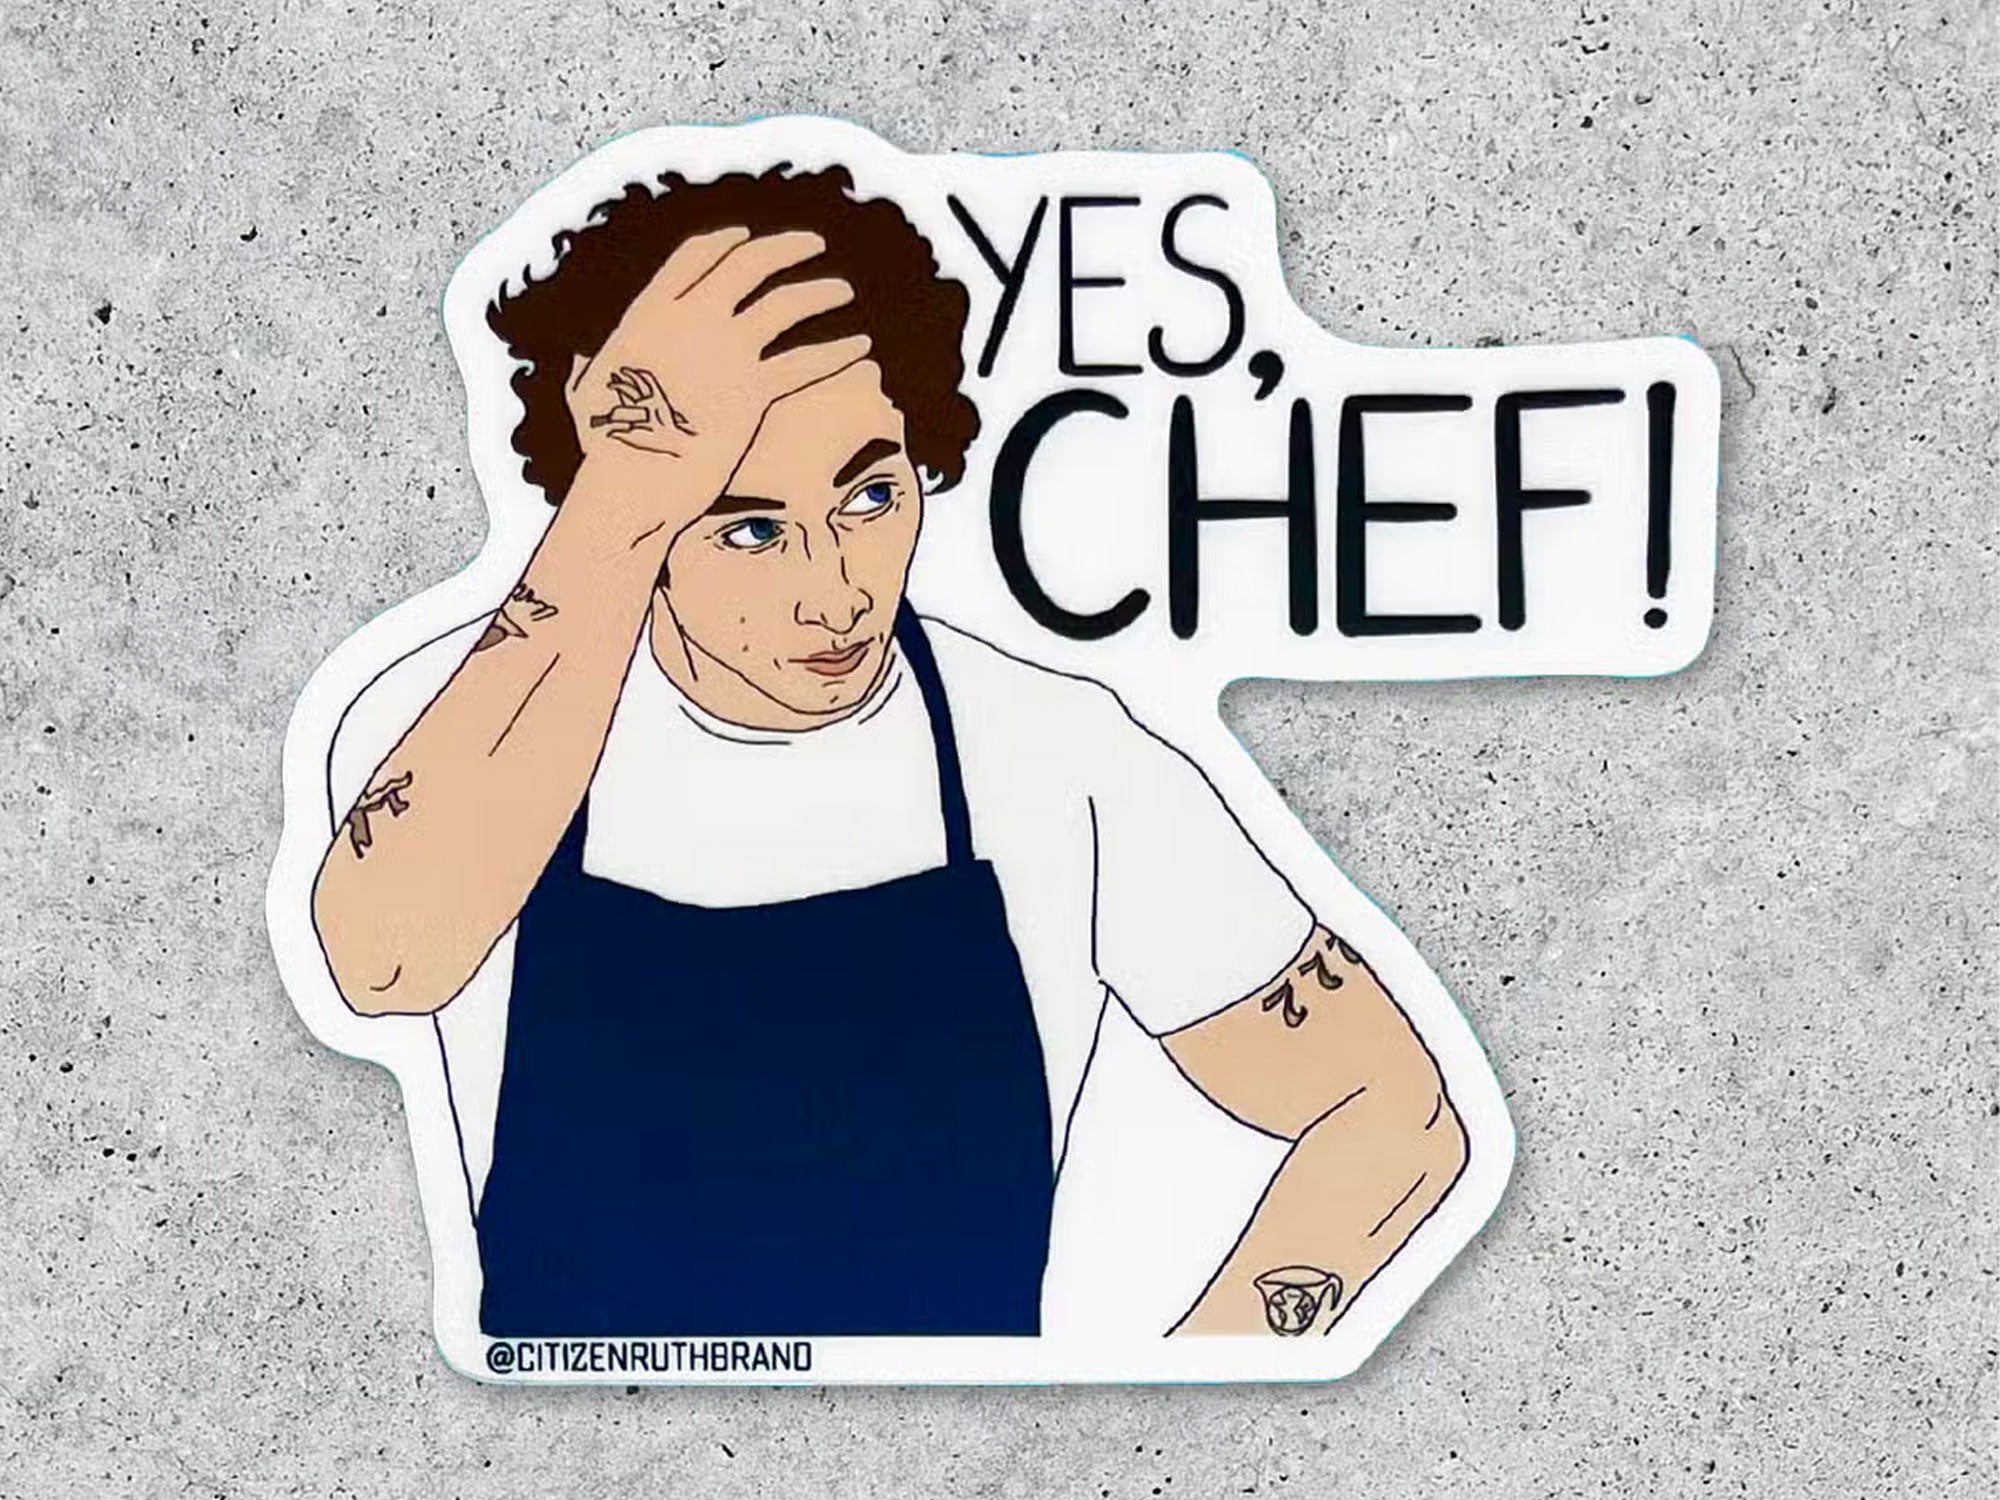 Sticker Chef Italien, Autocollants